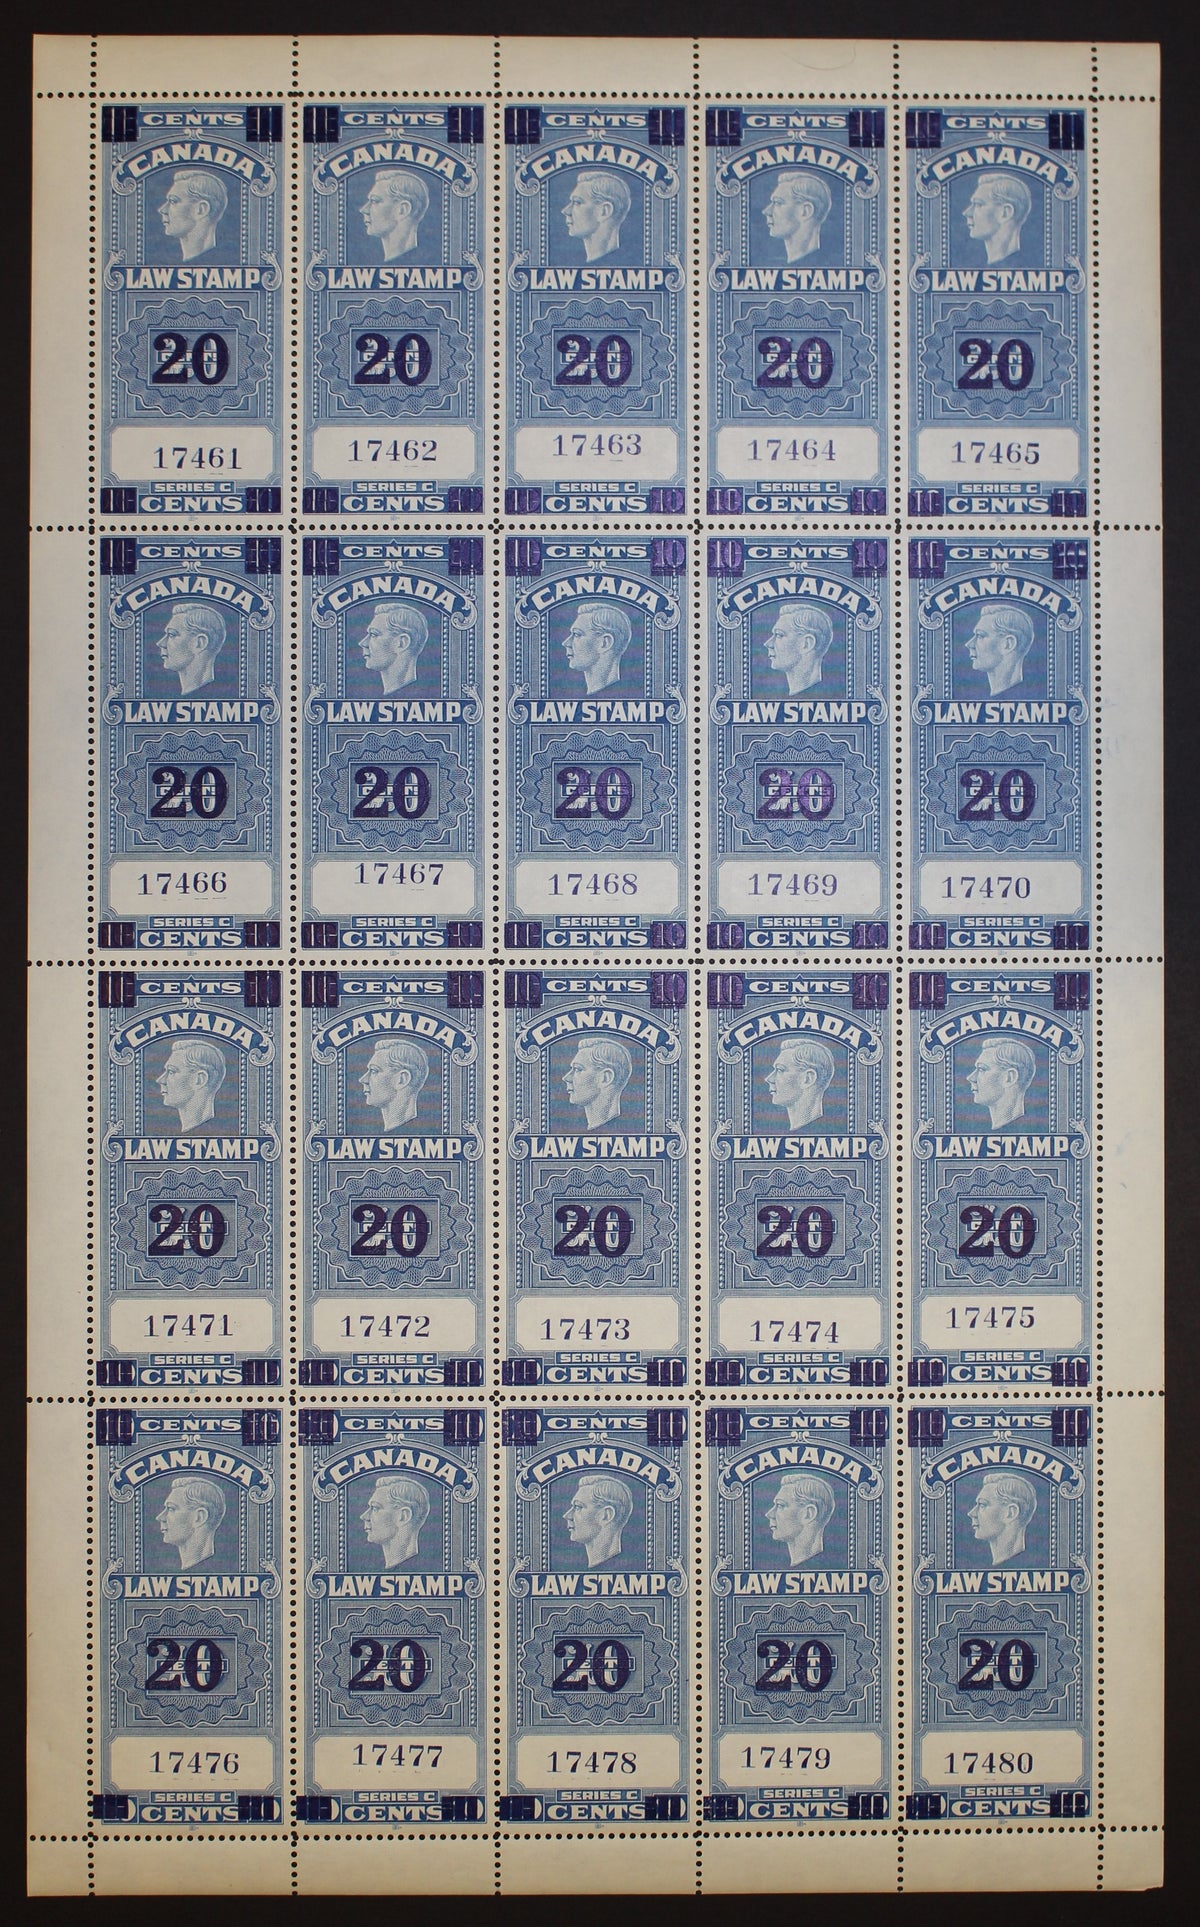 0022SC2403 - FSC22 - Mint Sheet of 20